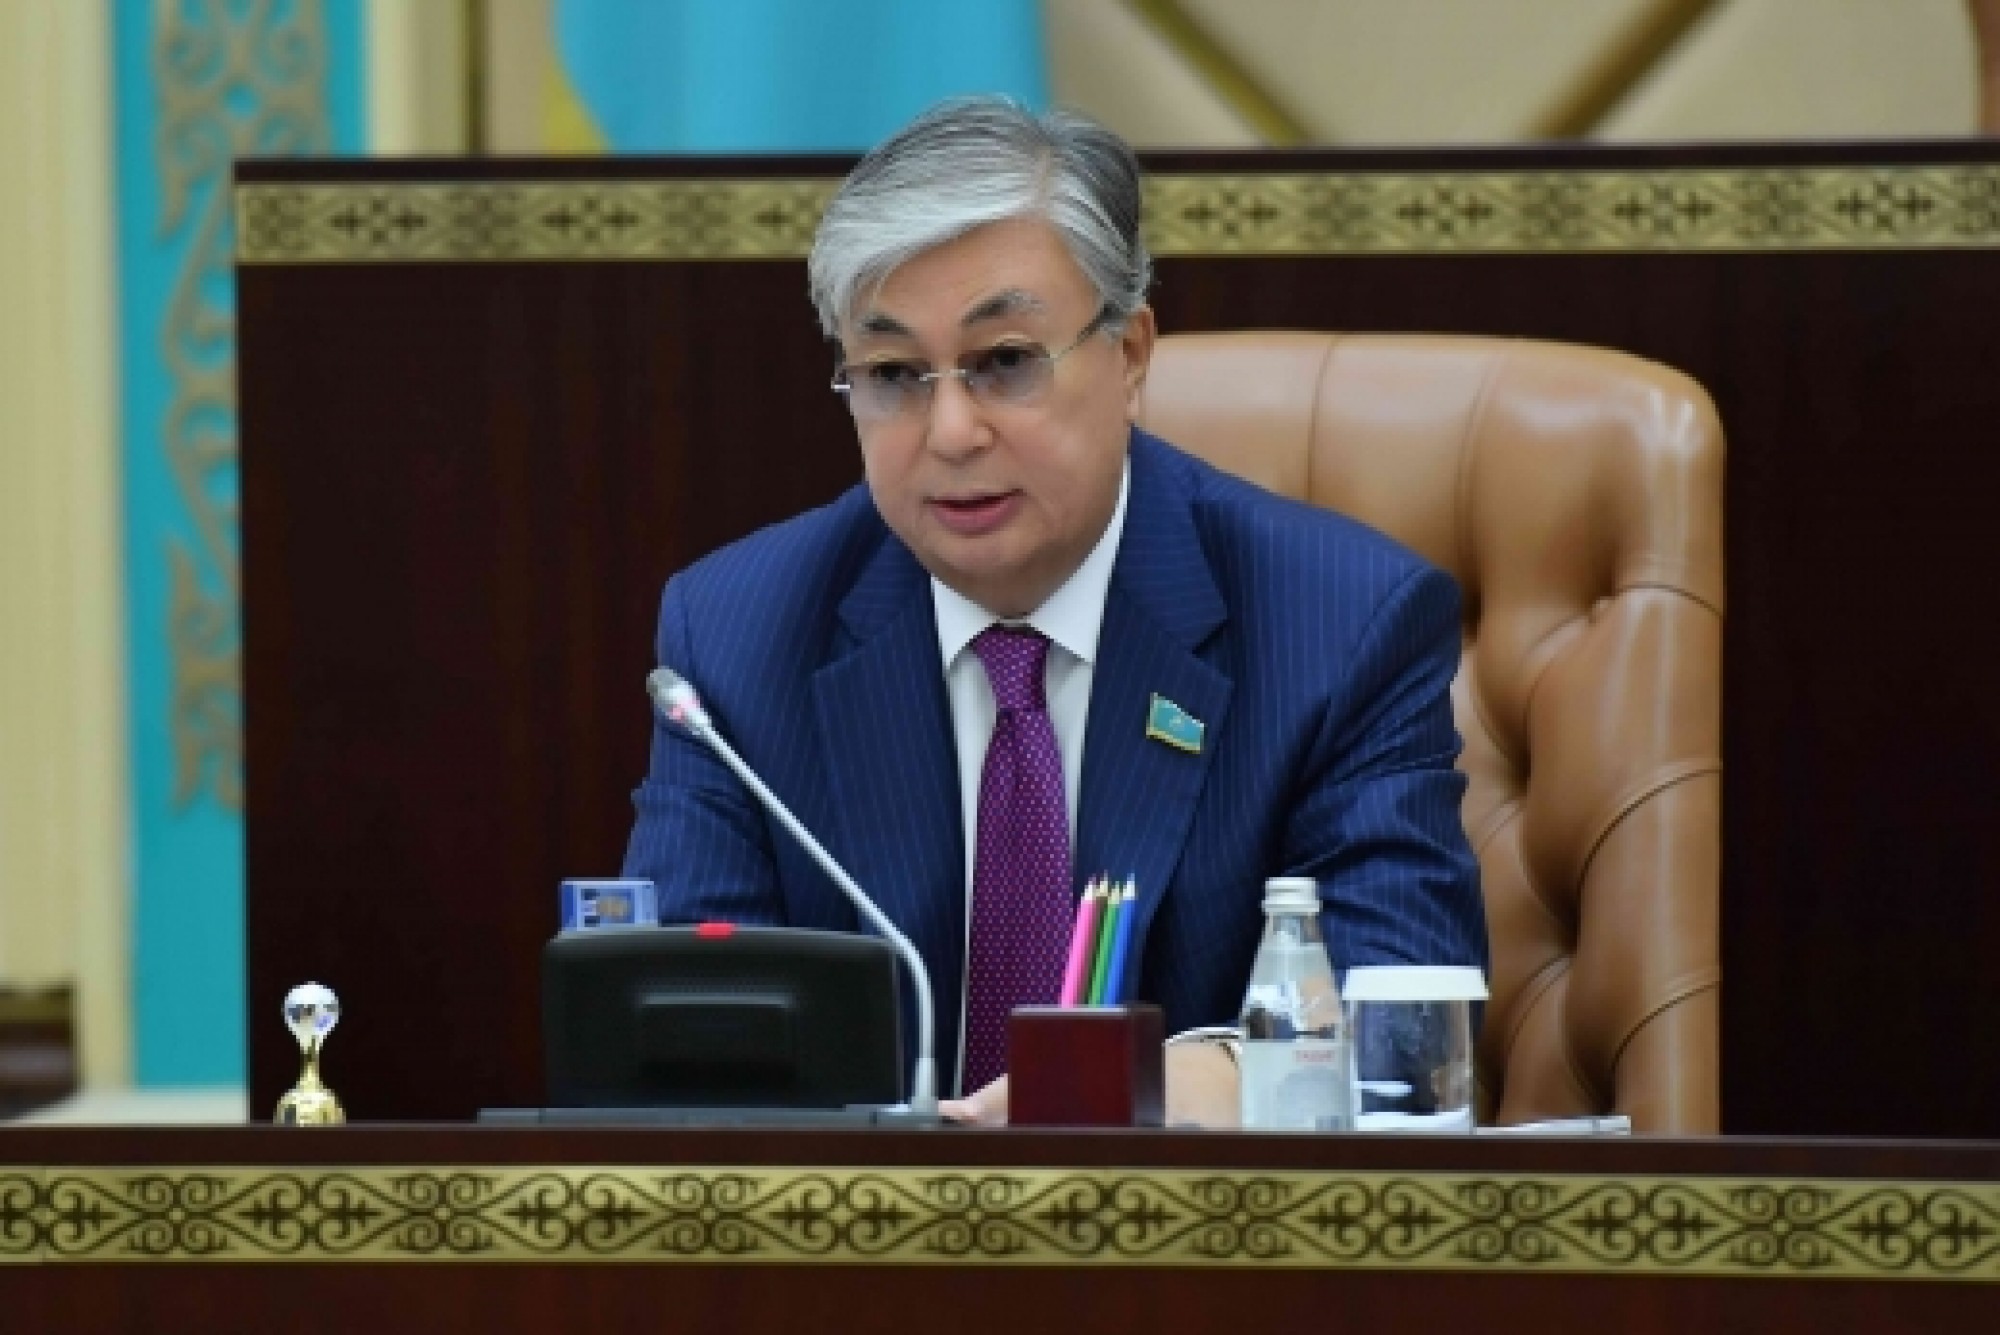 Senate Speaker comments the five social initiatives of Kazakh President